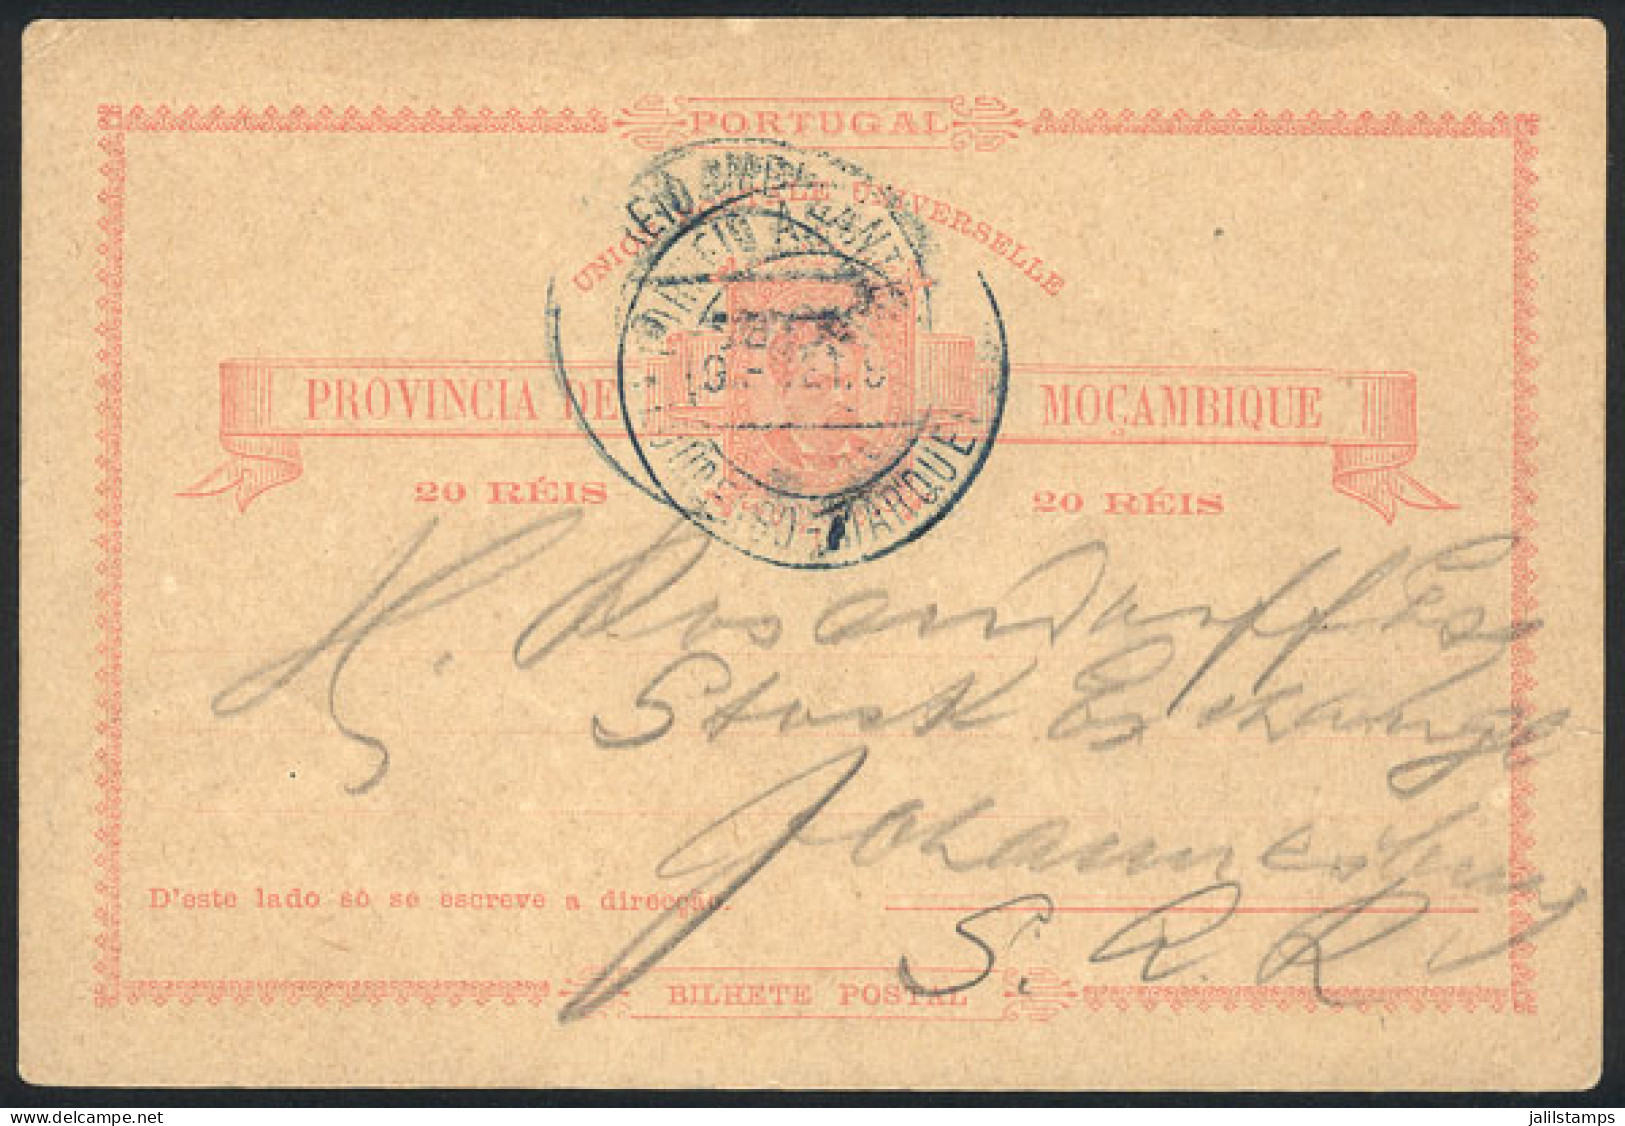 MOZAMBIQUE: 20Rs. Postal Card Sent From Lourenço Marques To Johannesburg On 9/SE/1898, Excellent! - Mozambique